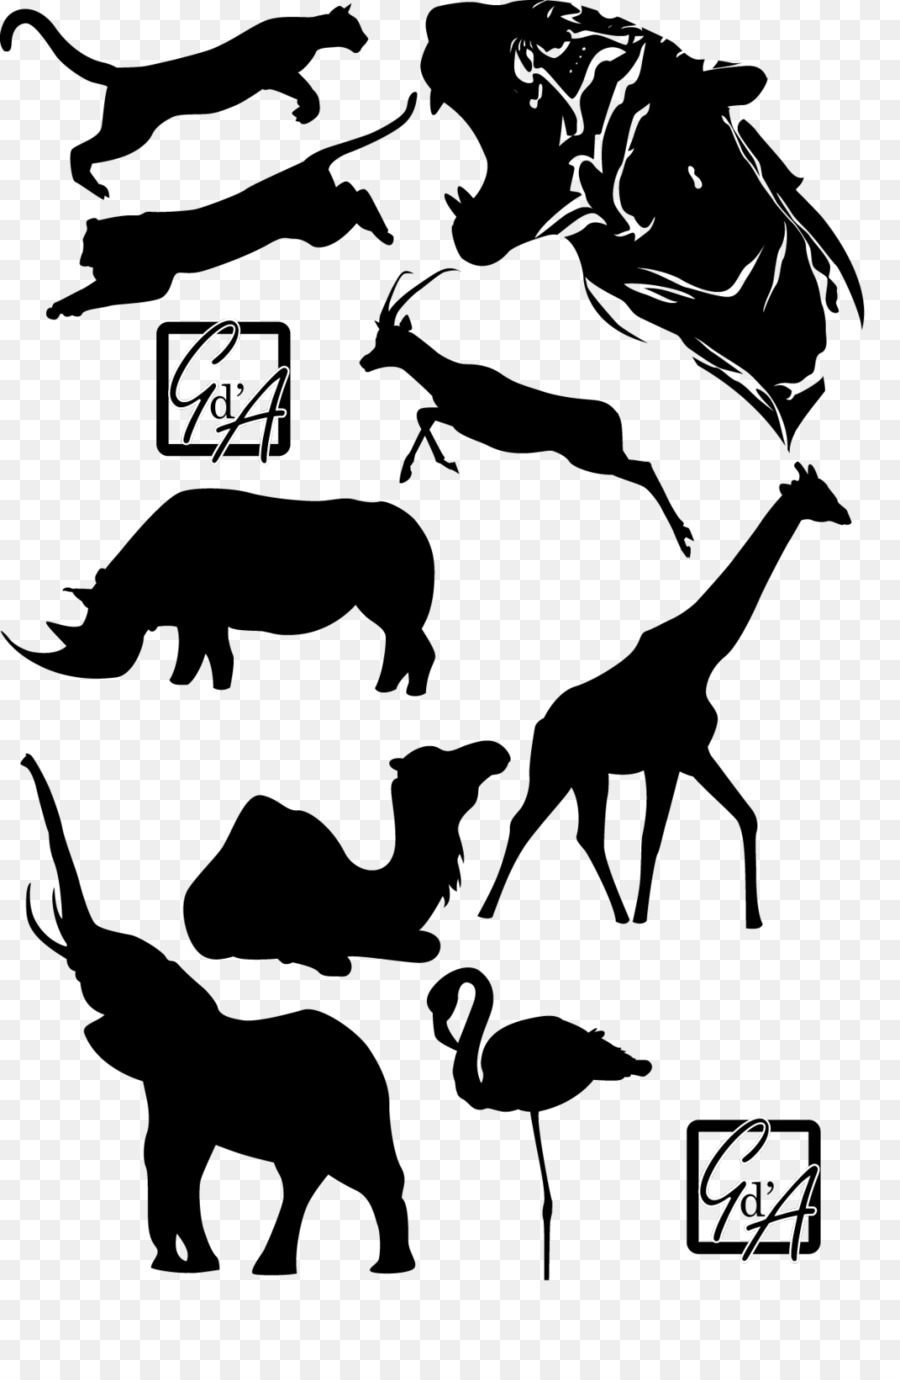 Mustang Dog Pack Tier Silhouette Clip art - illustrator Pinsel